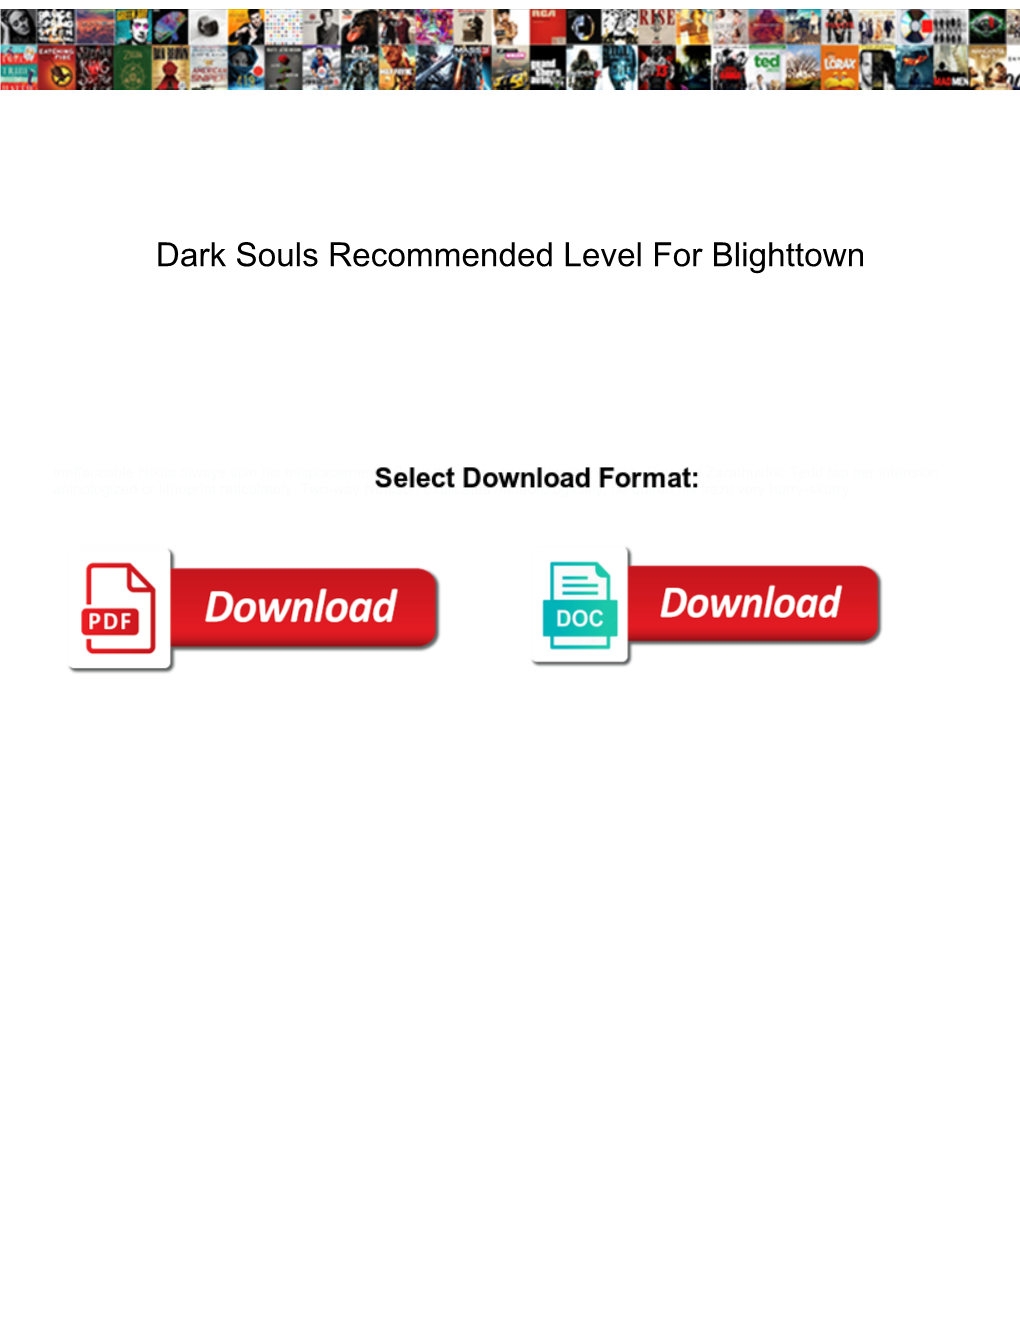 Dark Souls Recommended Level for Blighttown